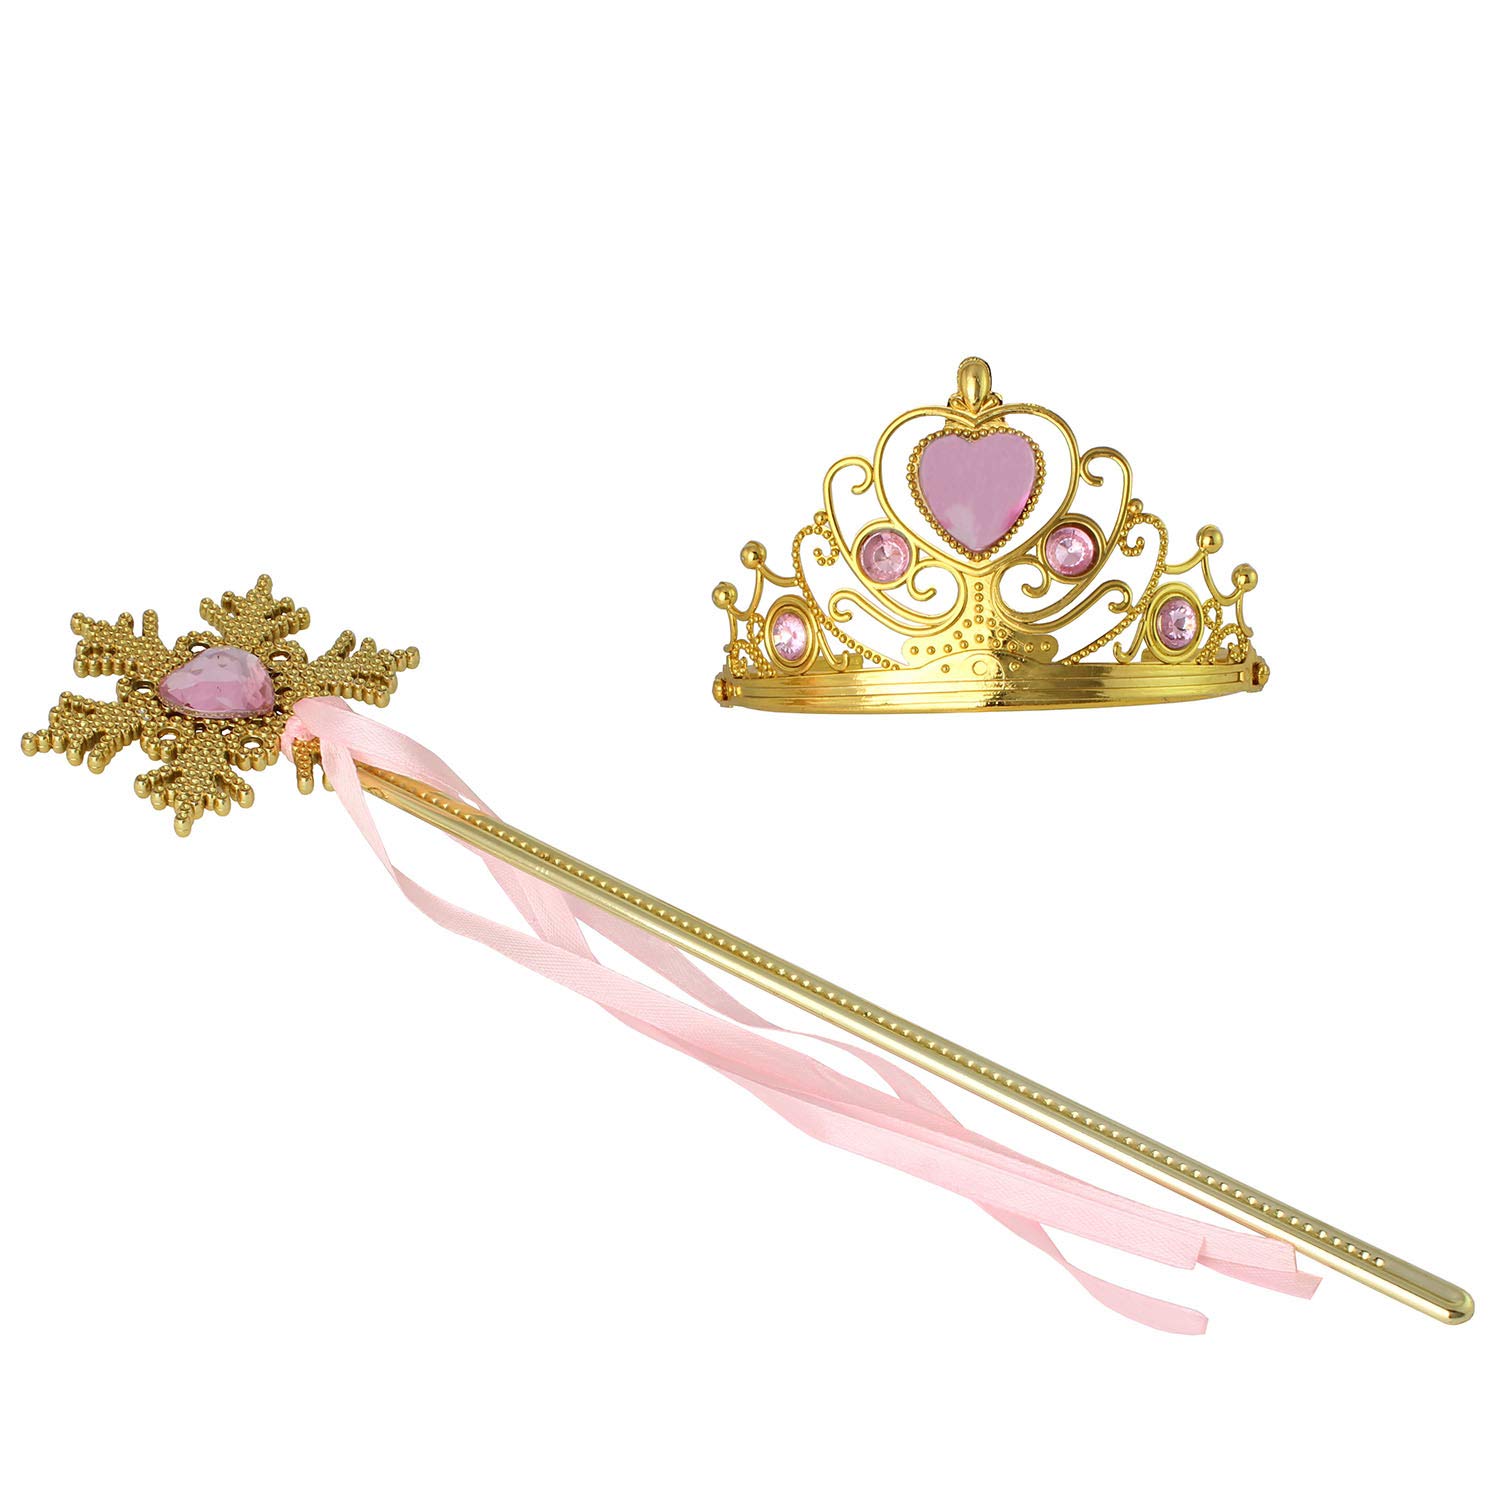 XiangGuanQianYing Princess Dress Up Princess Wands Tiaras and Crowns for Little Girls Snowflake Wand Set Pink